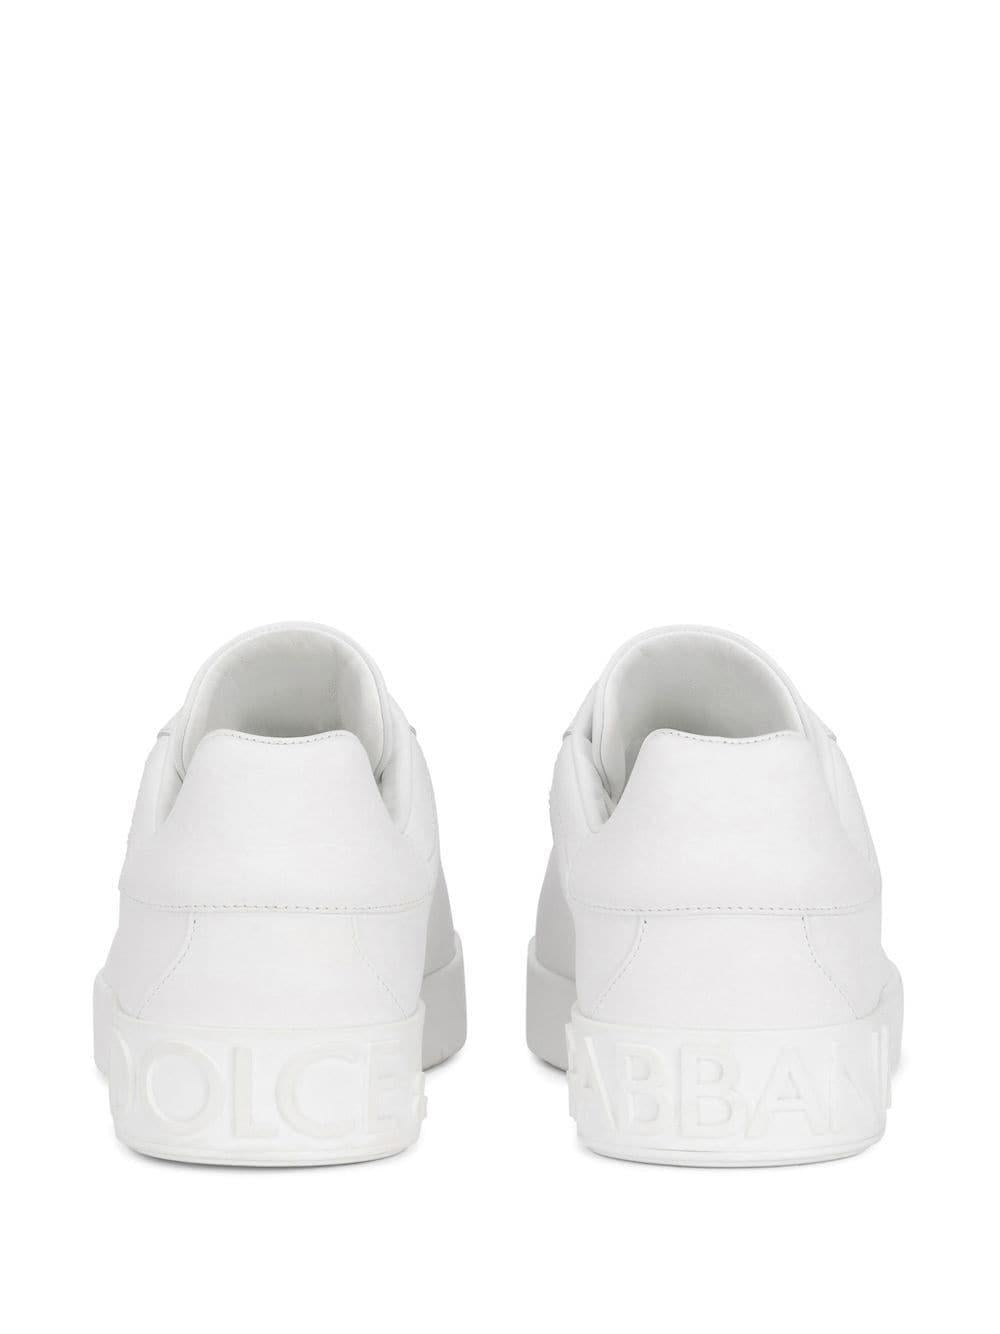 DOLCE & GABBANA Men's Portofino Leather Sneakers - Enhanced with Embossed Logo